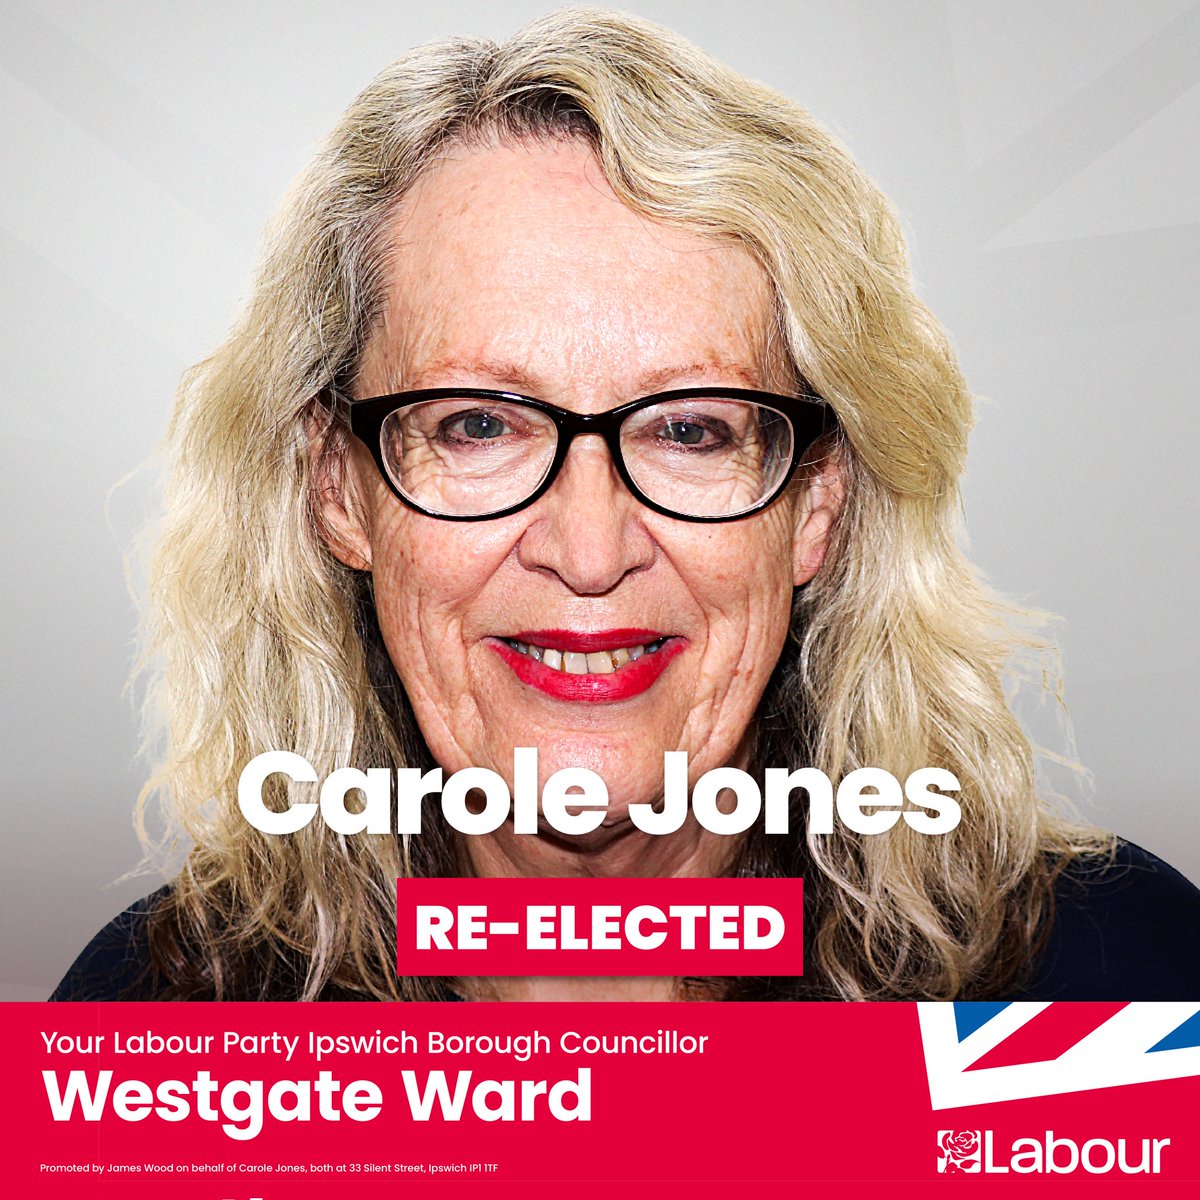 Westgate result: Conservative 370, Labour 935, Lib Dem 147, Green 235. Labour hold.